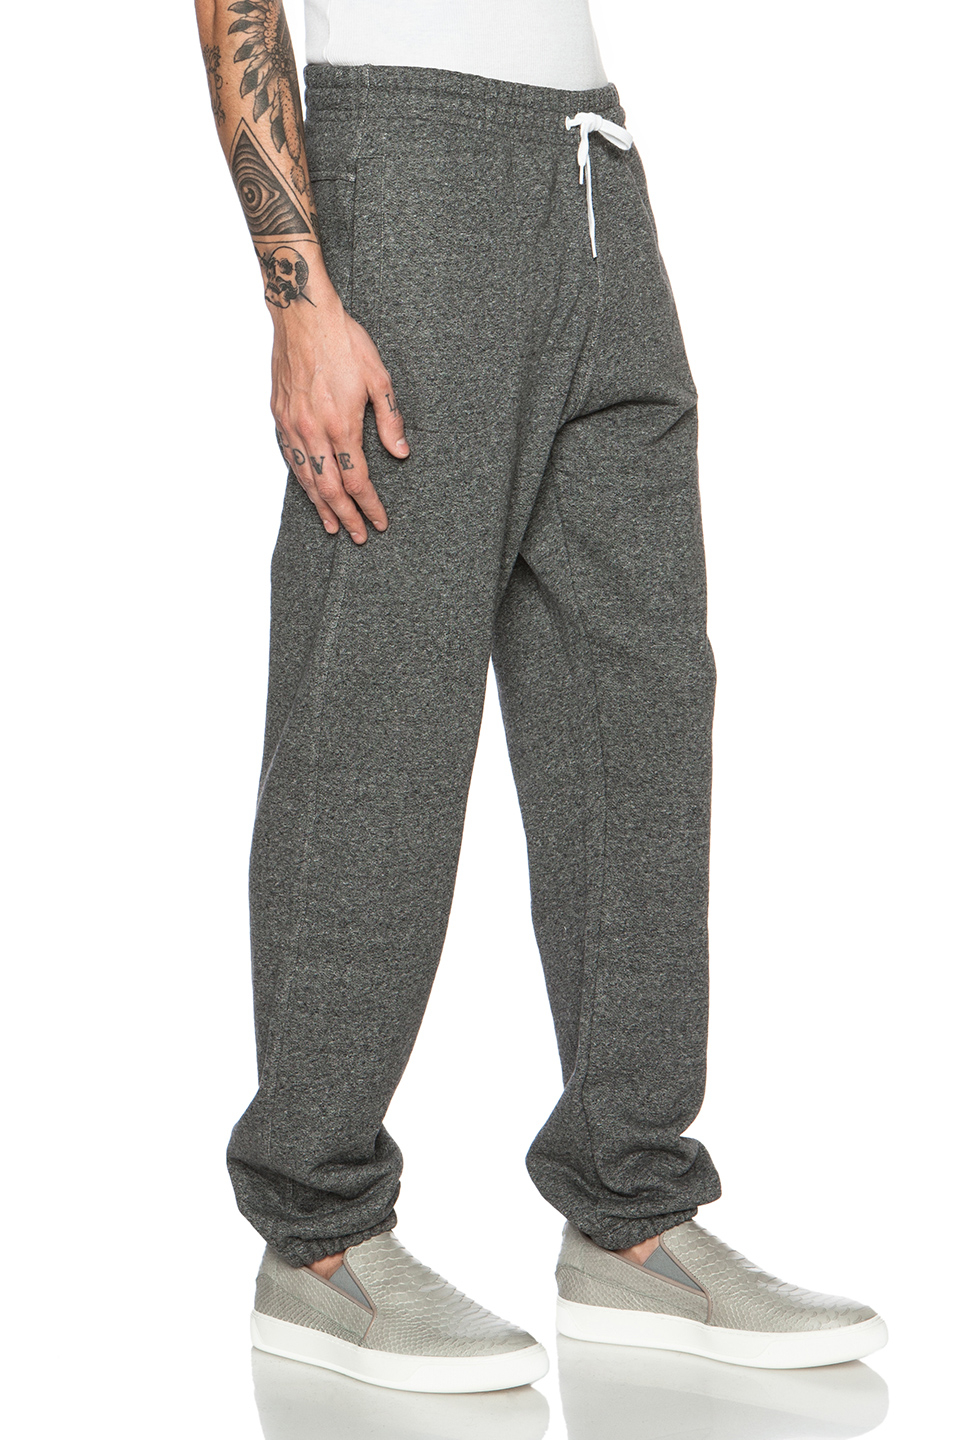 Lyst - Maison Kitsuné Men's Jogging Molleton Cotton Pants in Gray